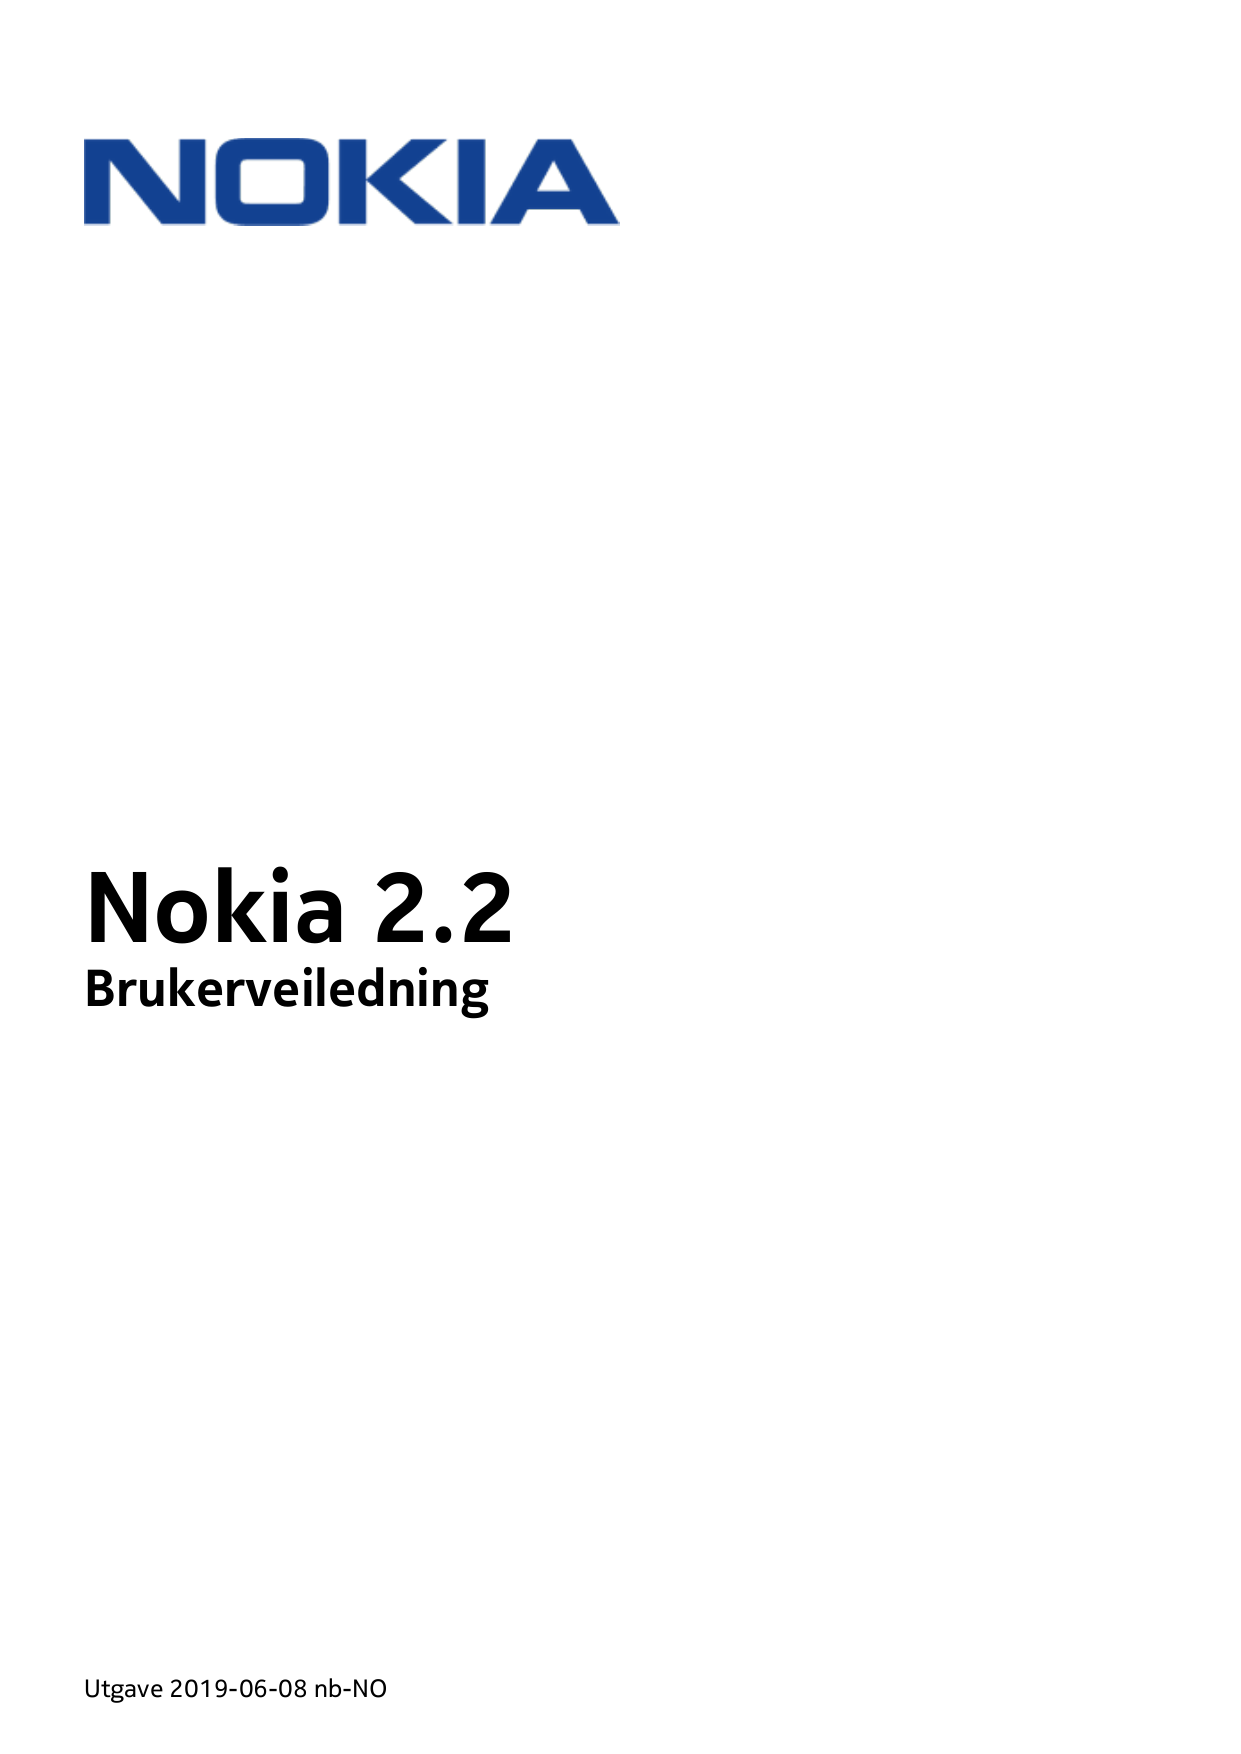 Nokia 2.2BrukerveiledningUtgave 2019-06-08 nb-NO